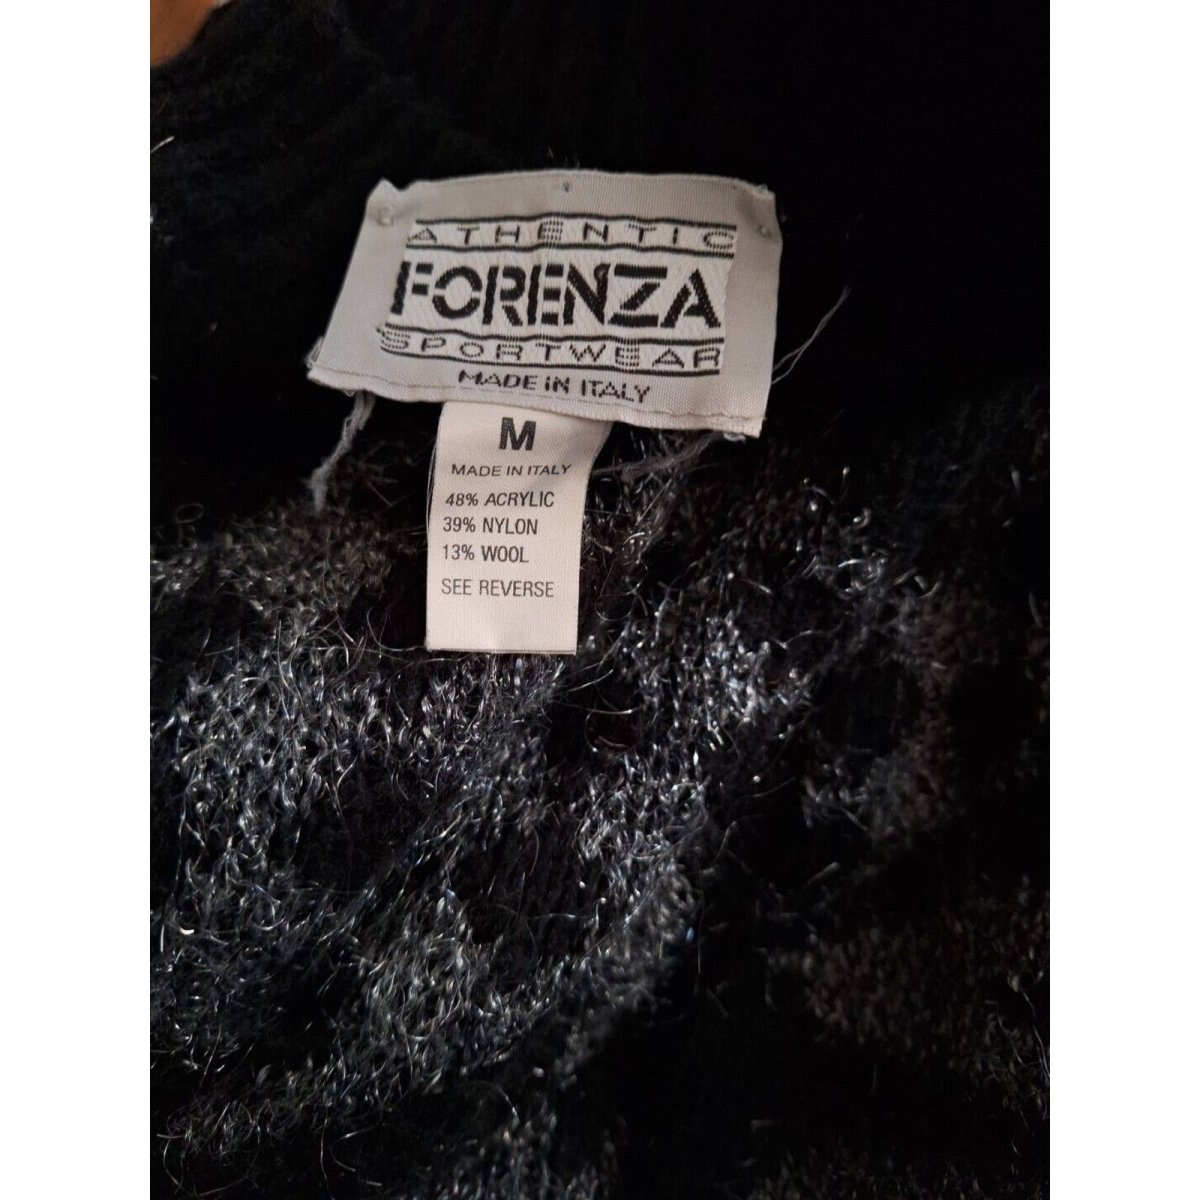 Vintage 80s Forenza Italy Geometric Slouchy Sweater Unisex Women Size Medium - themallvintage The Mall Vintage